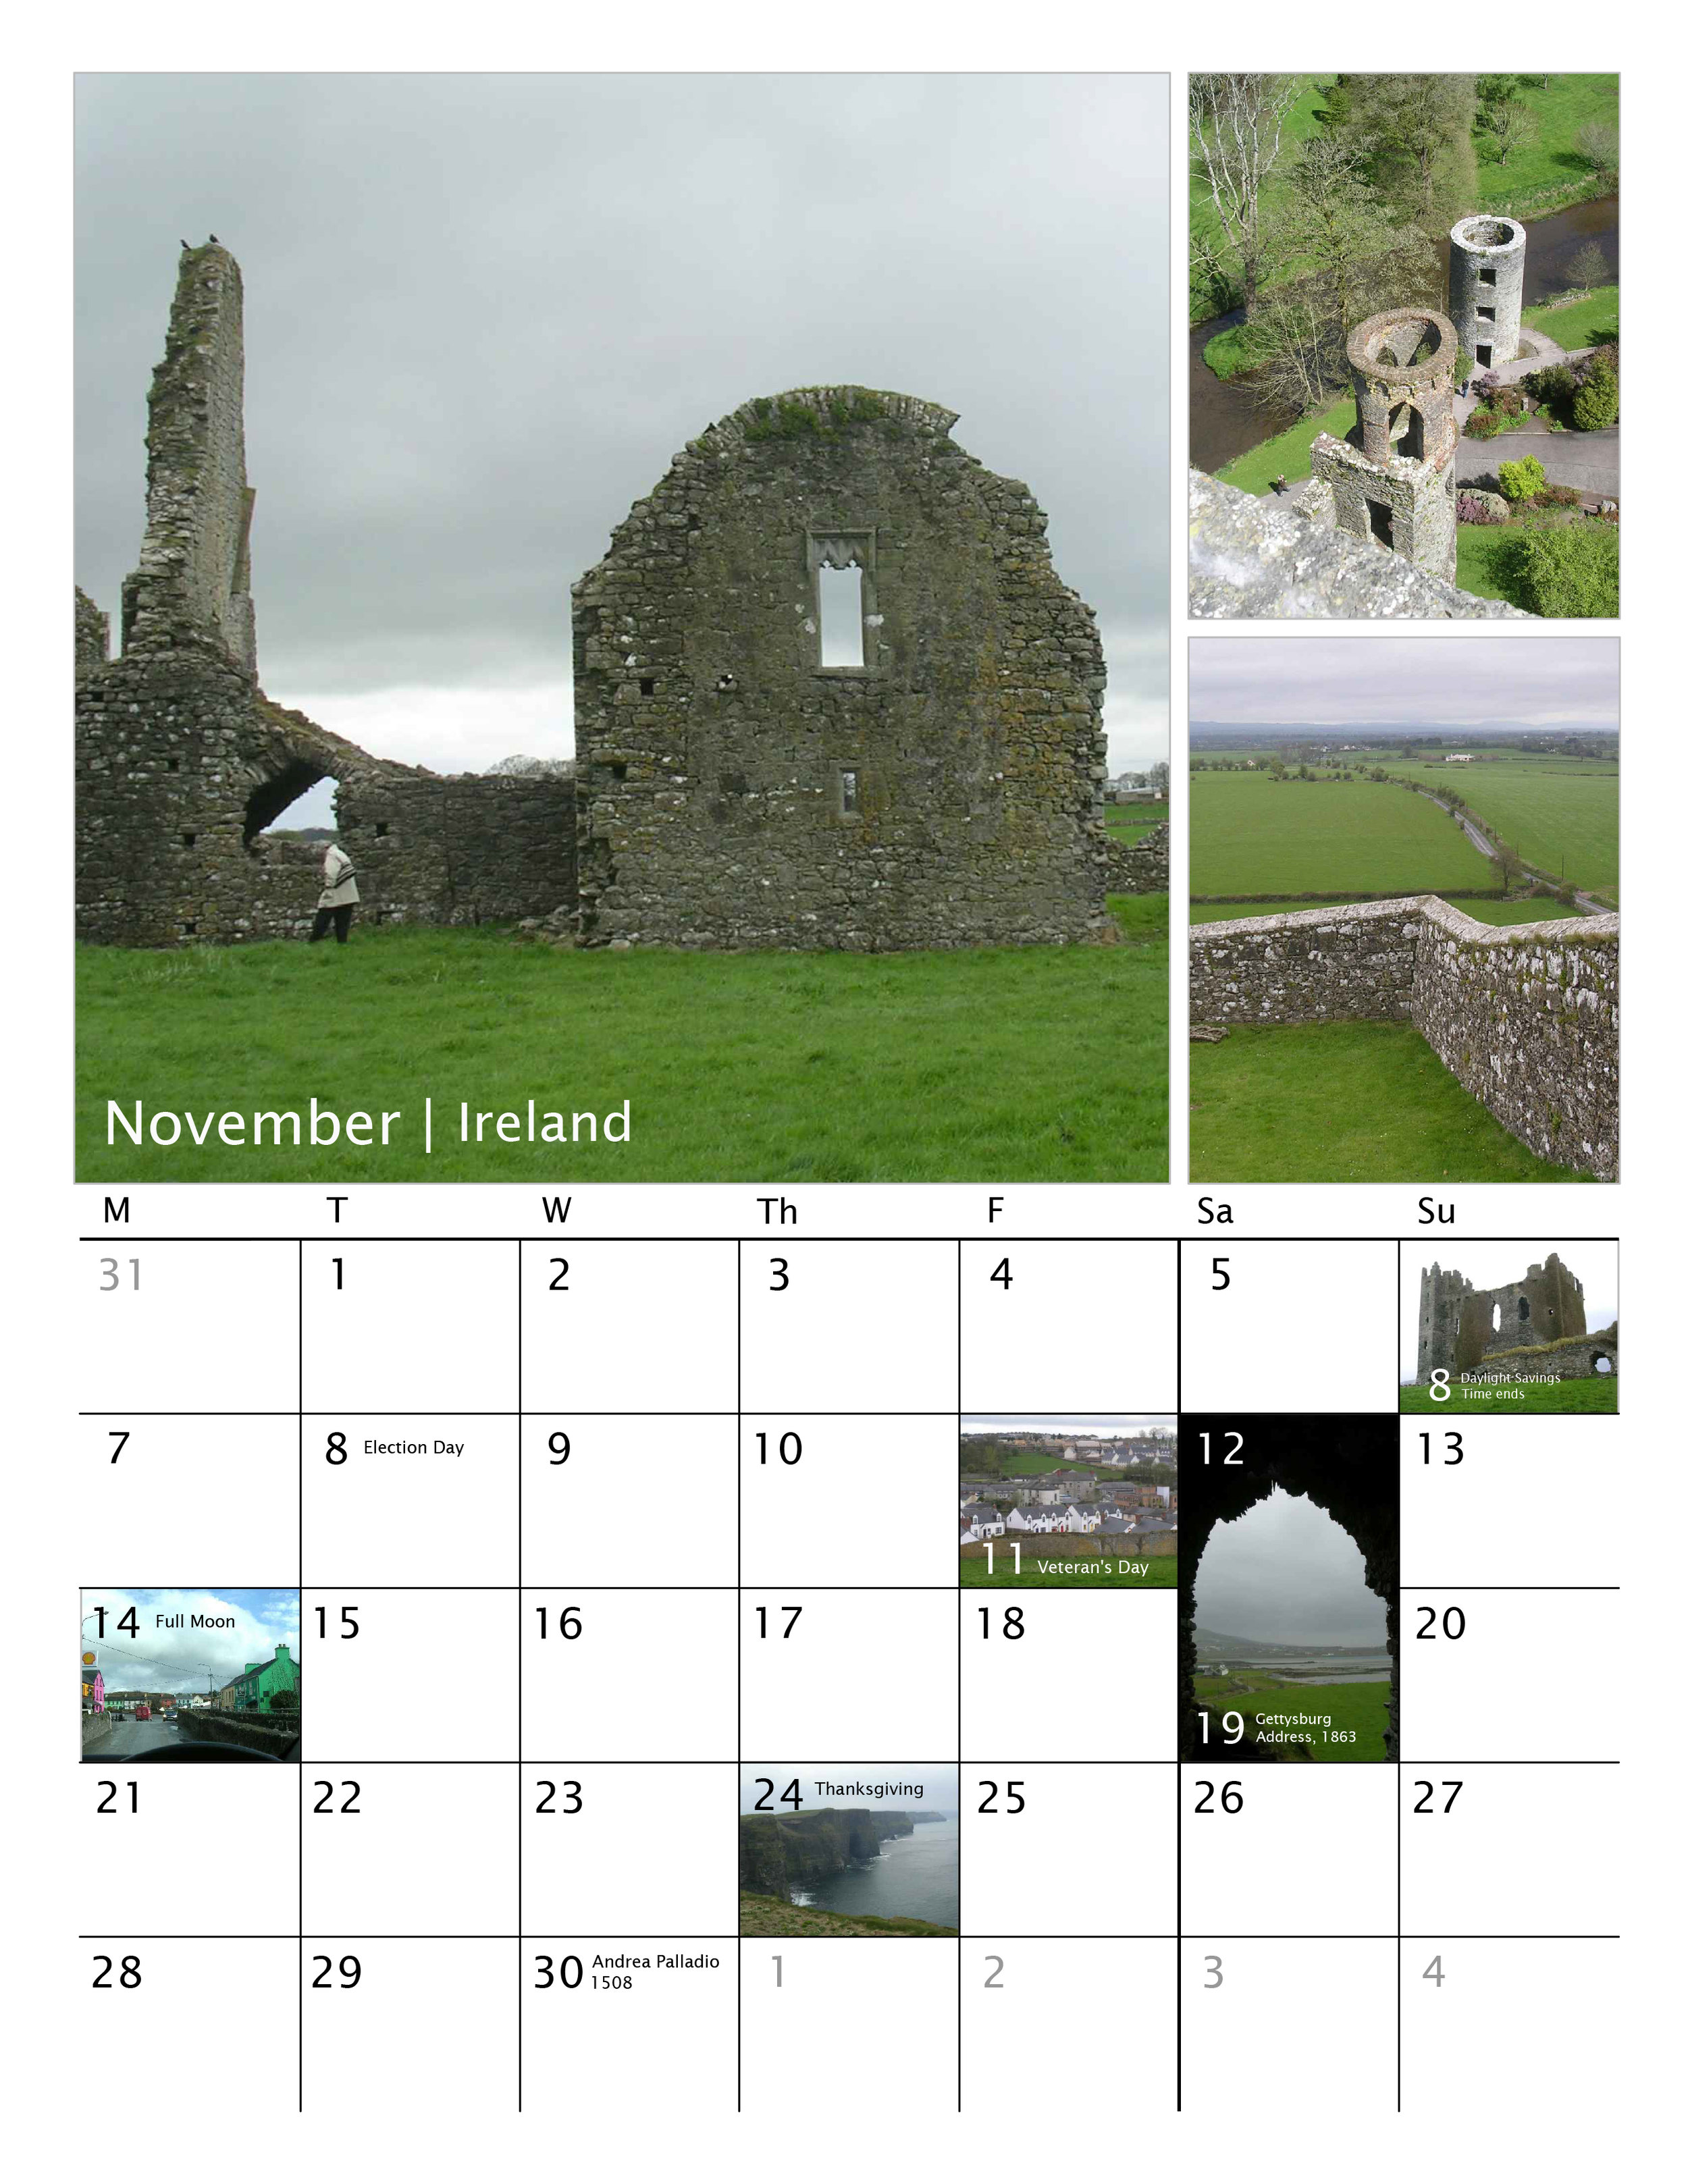 11.Nov.Ireland.jpg